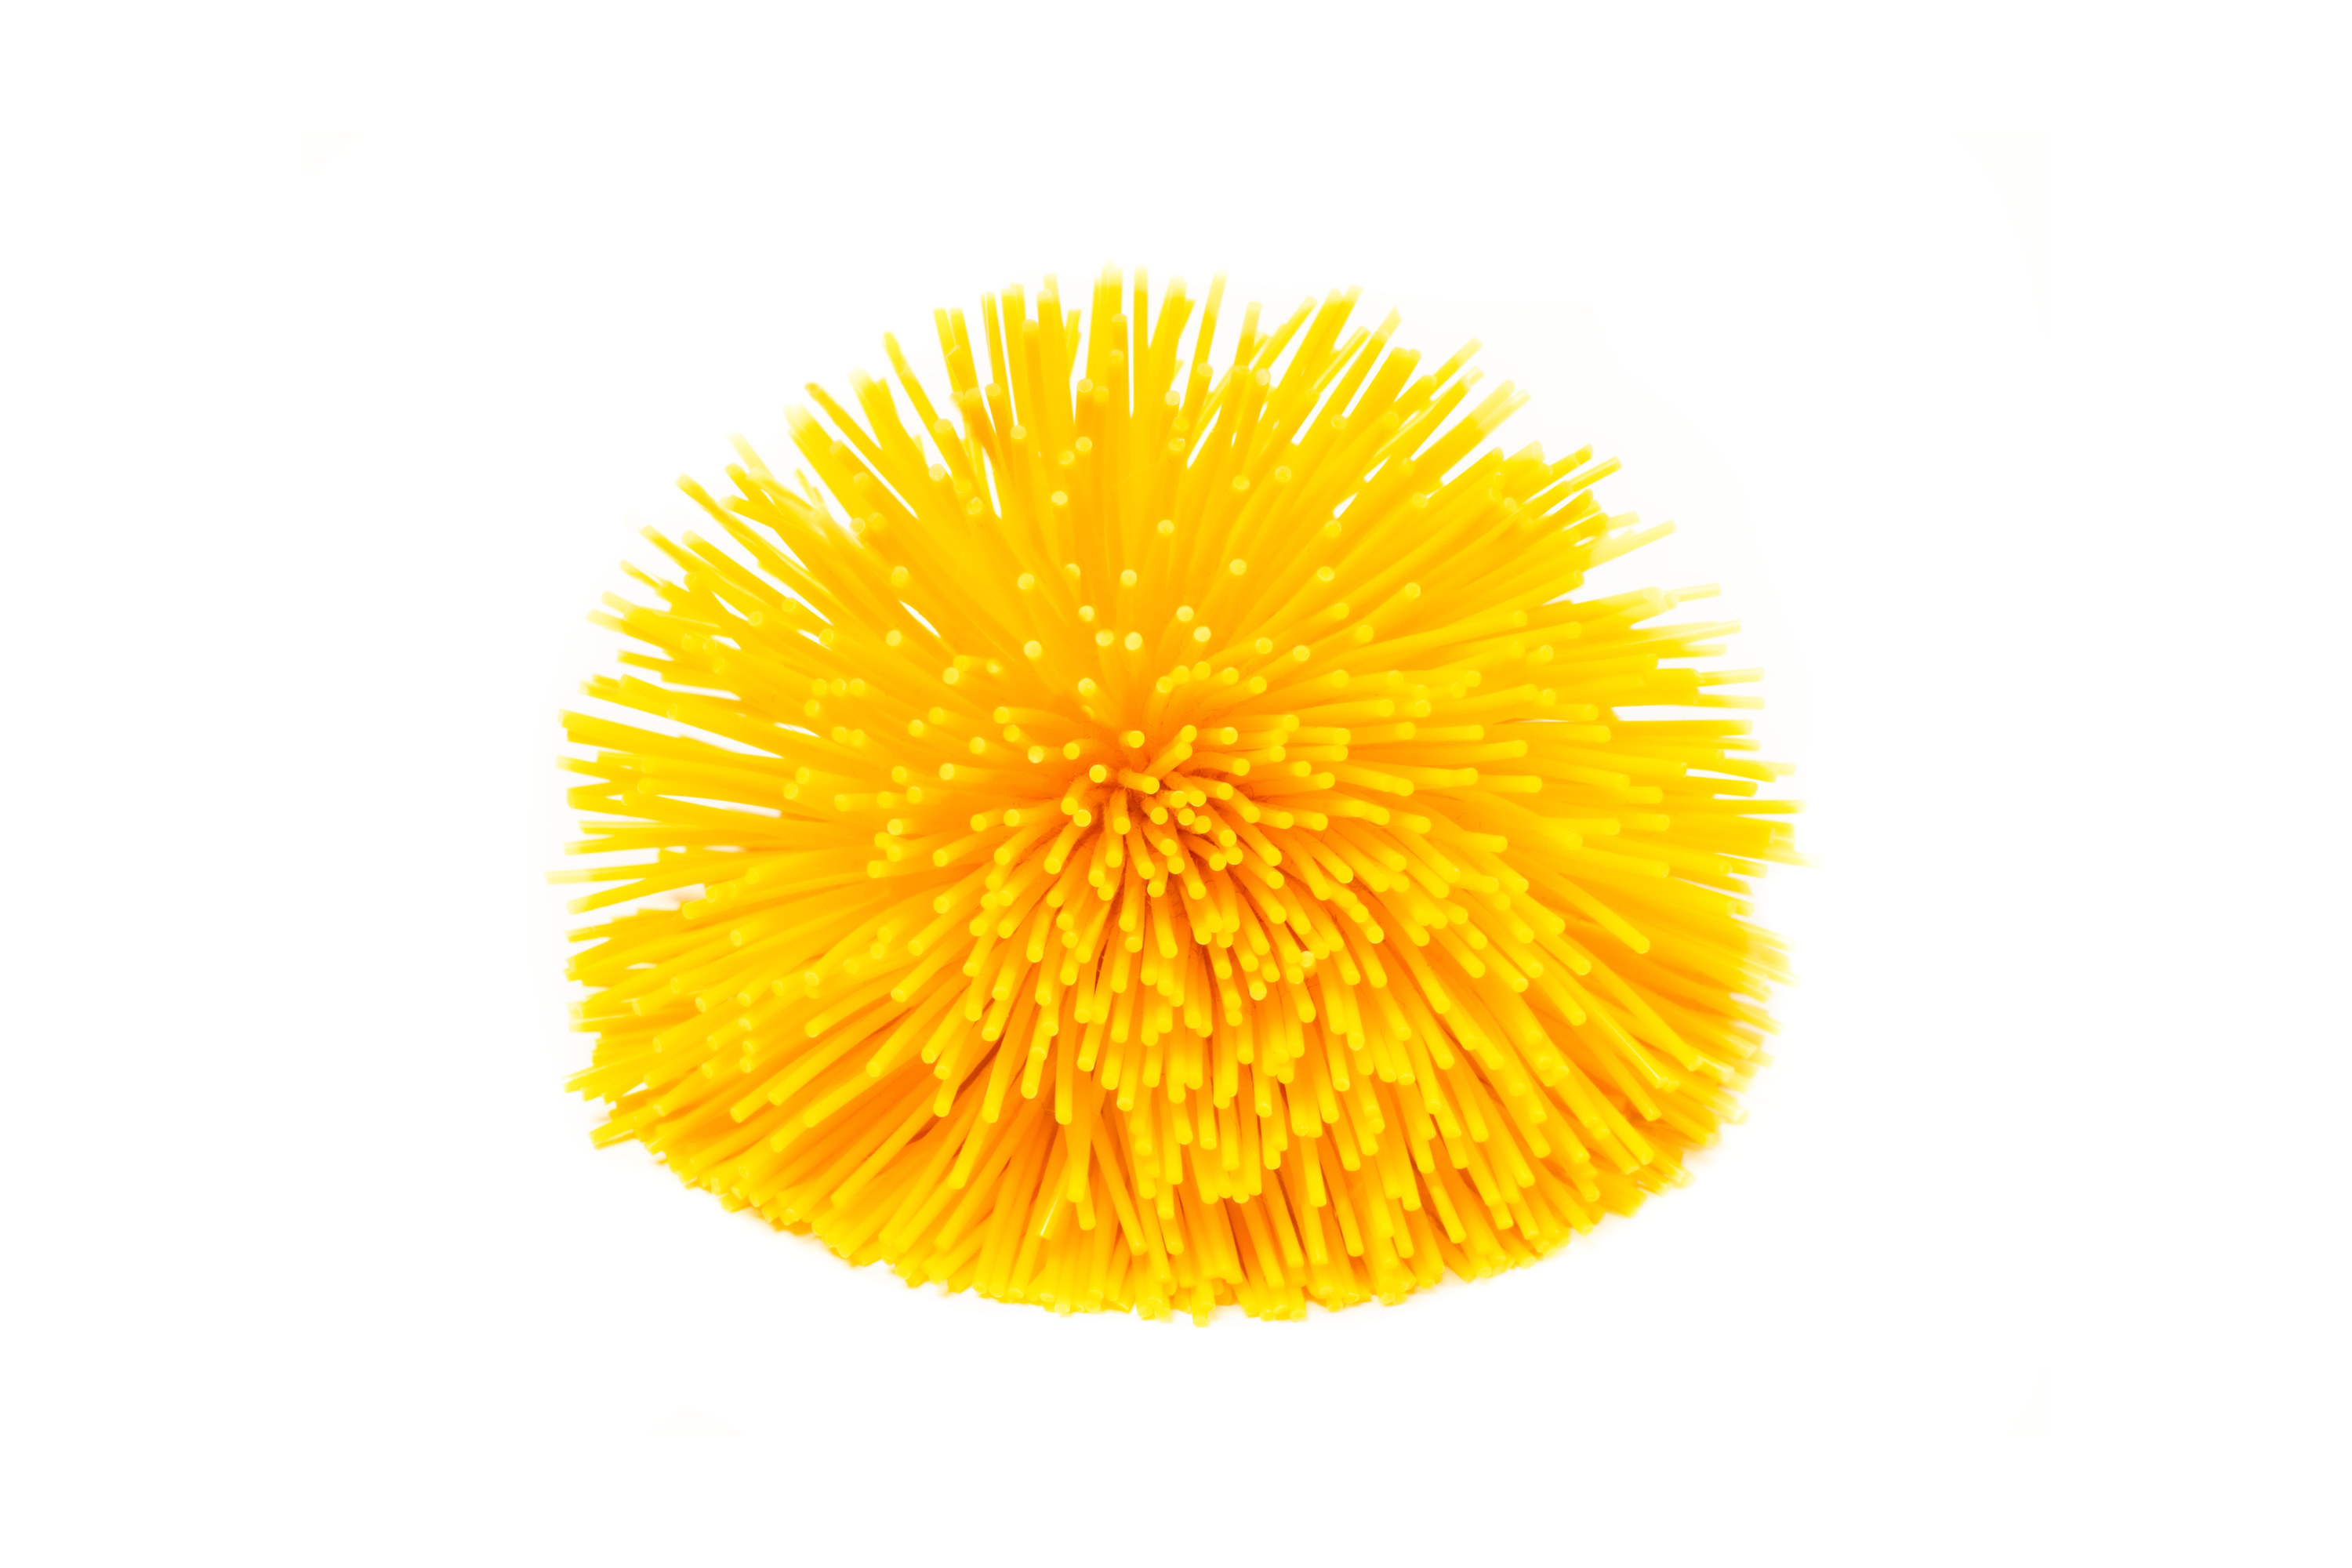 A yellow koosh ball